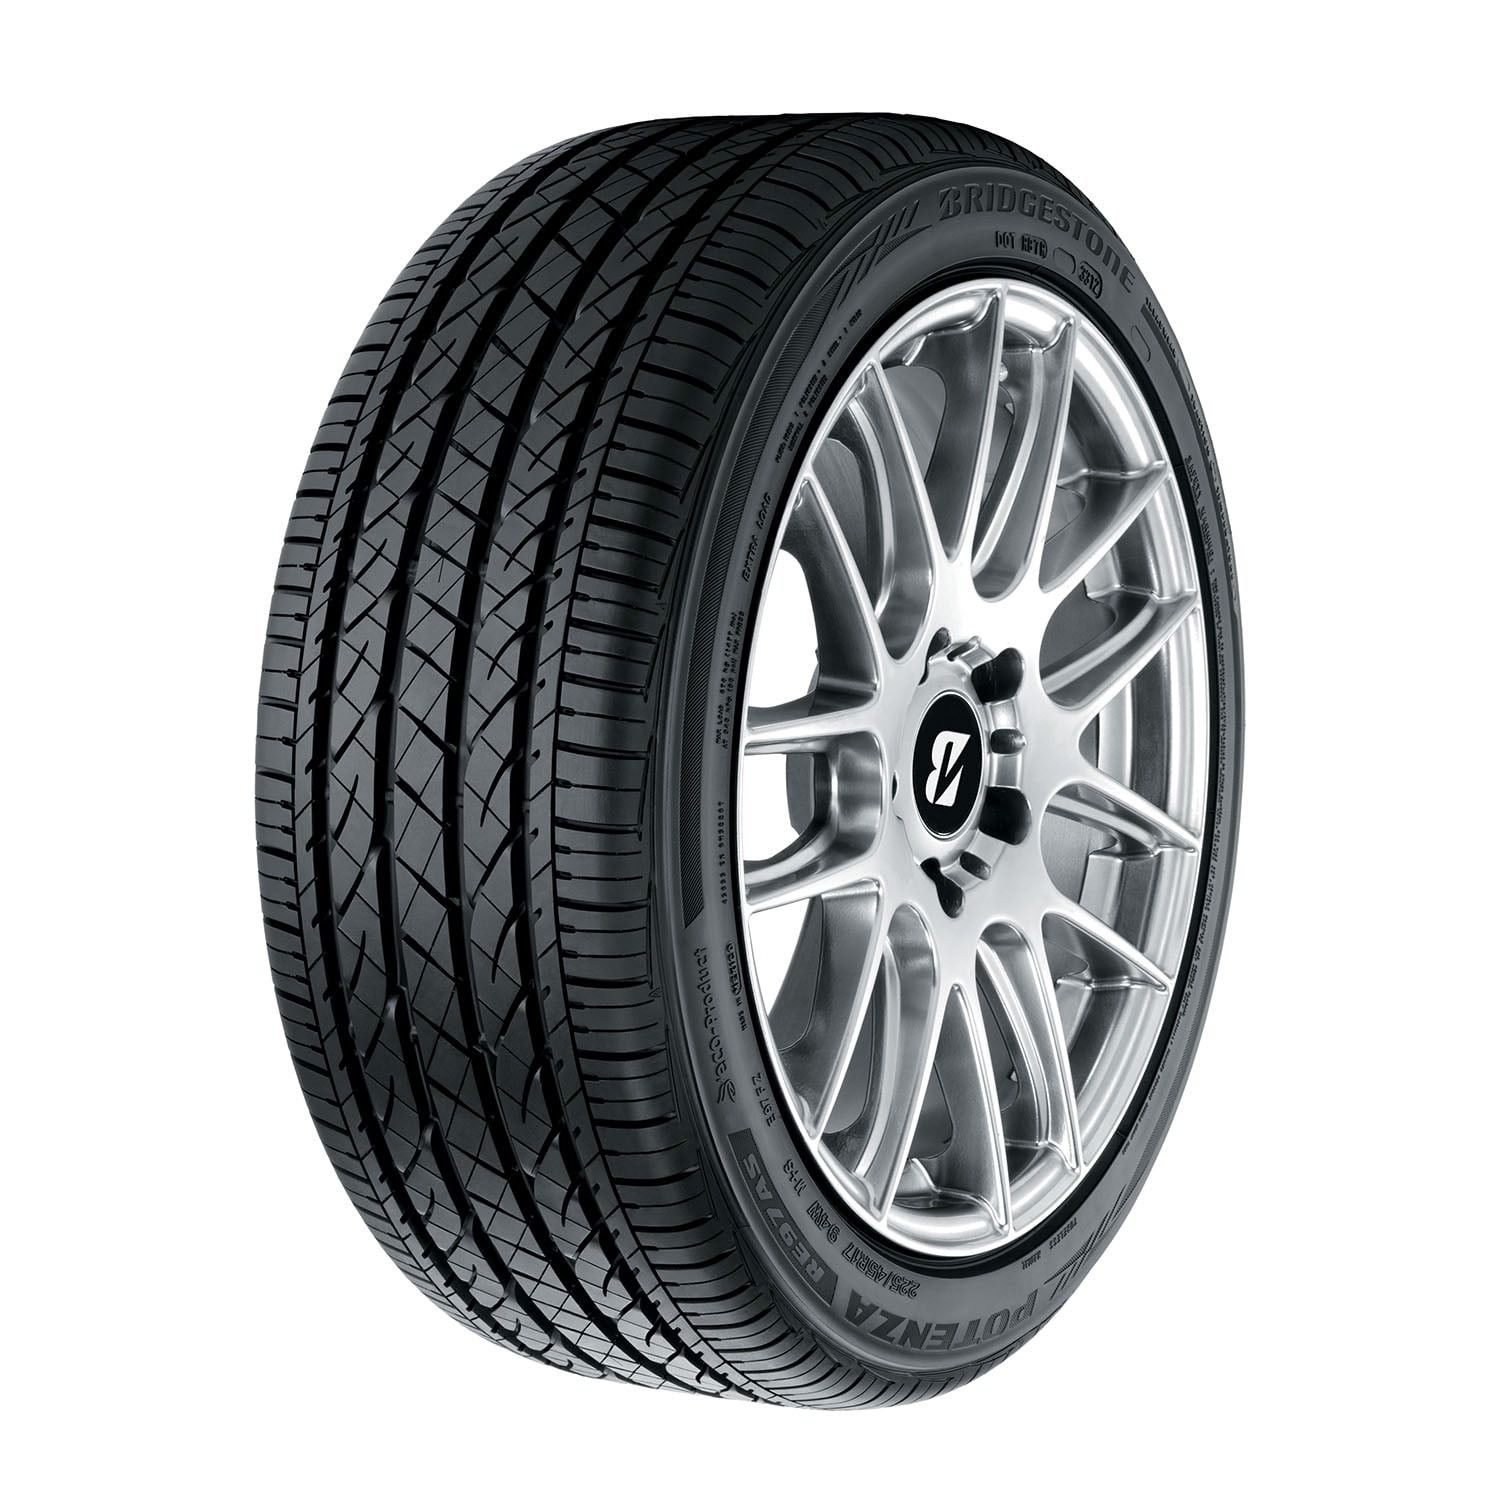 Bridgestone Potenza RE97AS RFT All Season P225/55R17 95V Passenger Tire